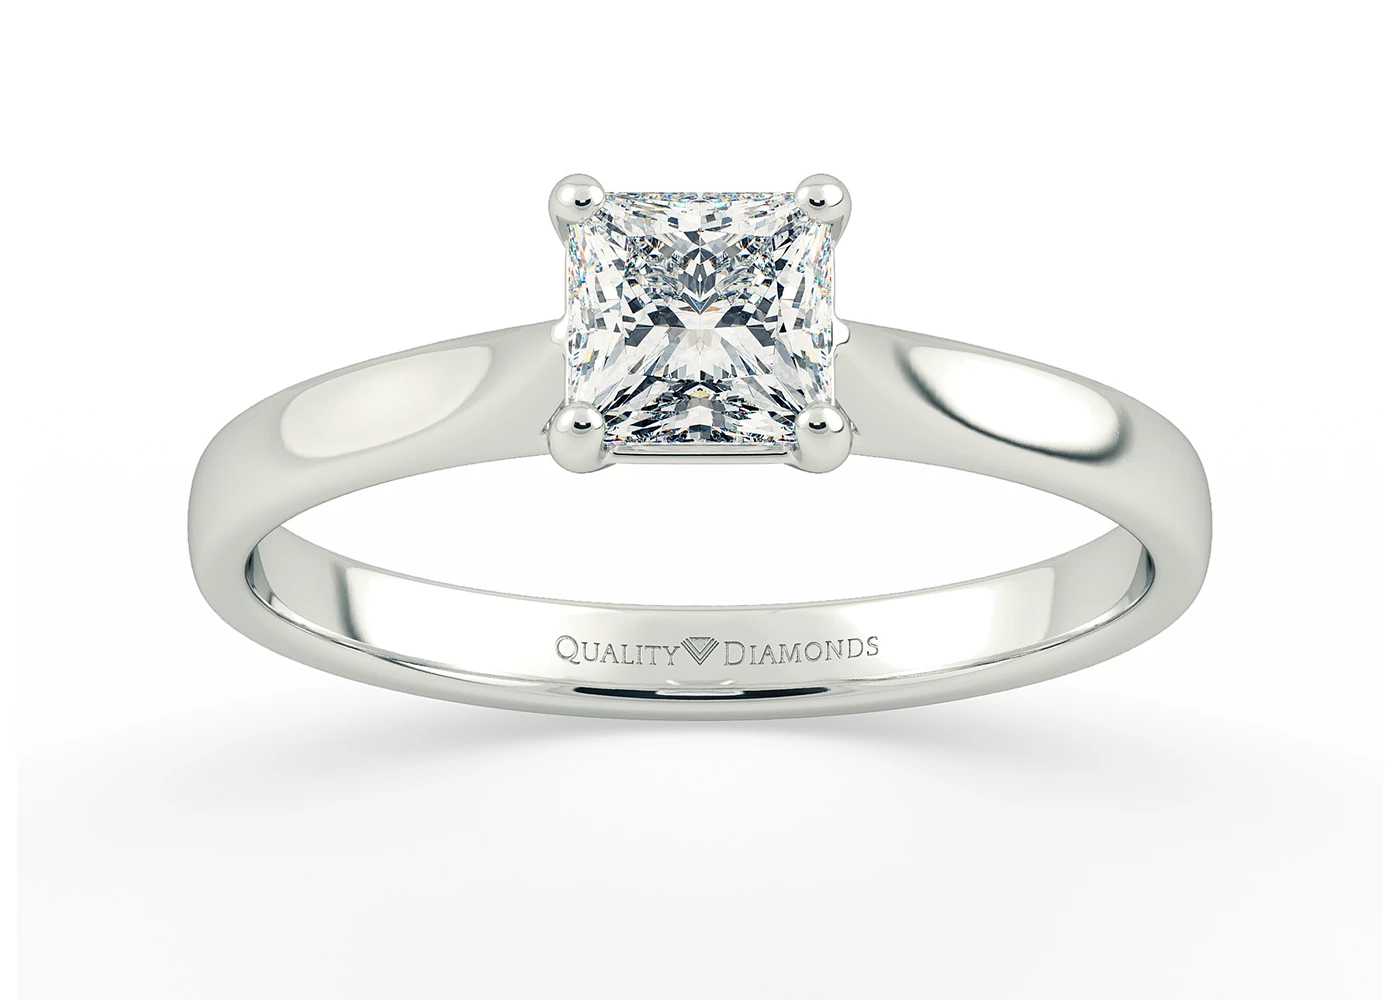 Princess Clara Diamond Ring in 9K White Gold